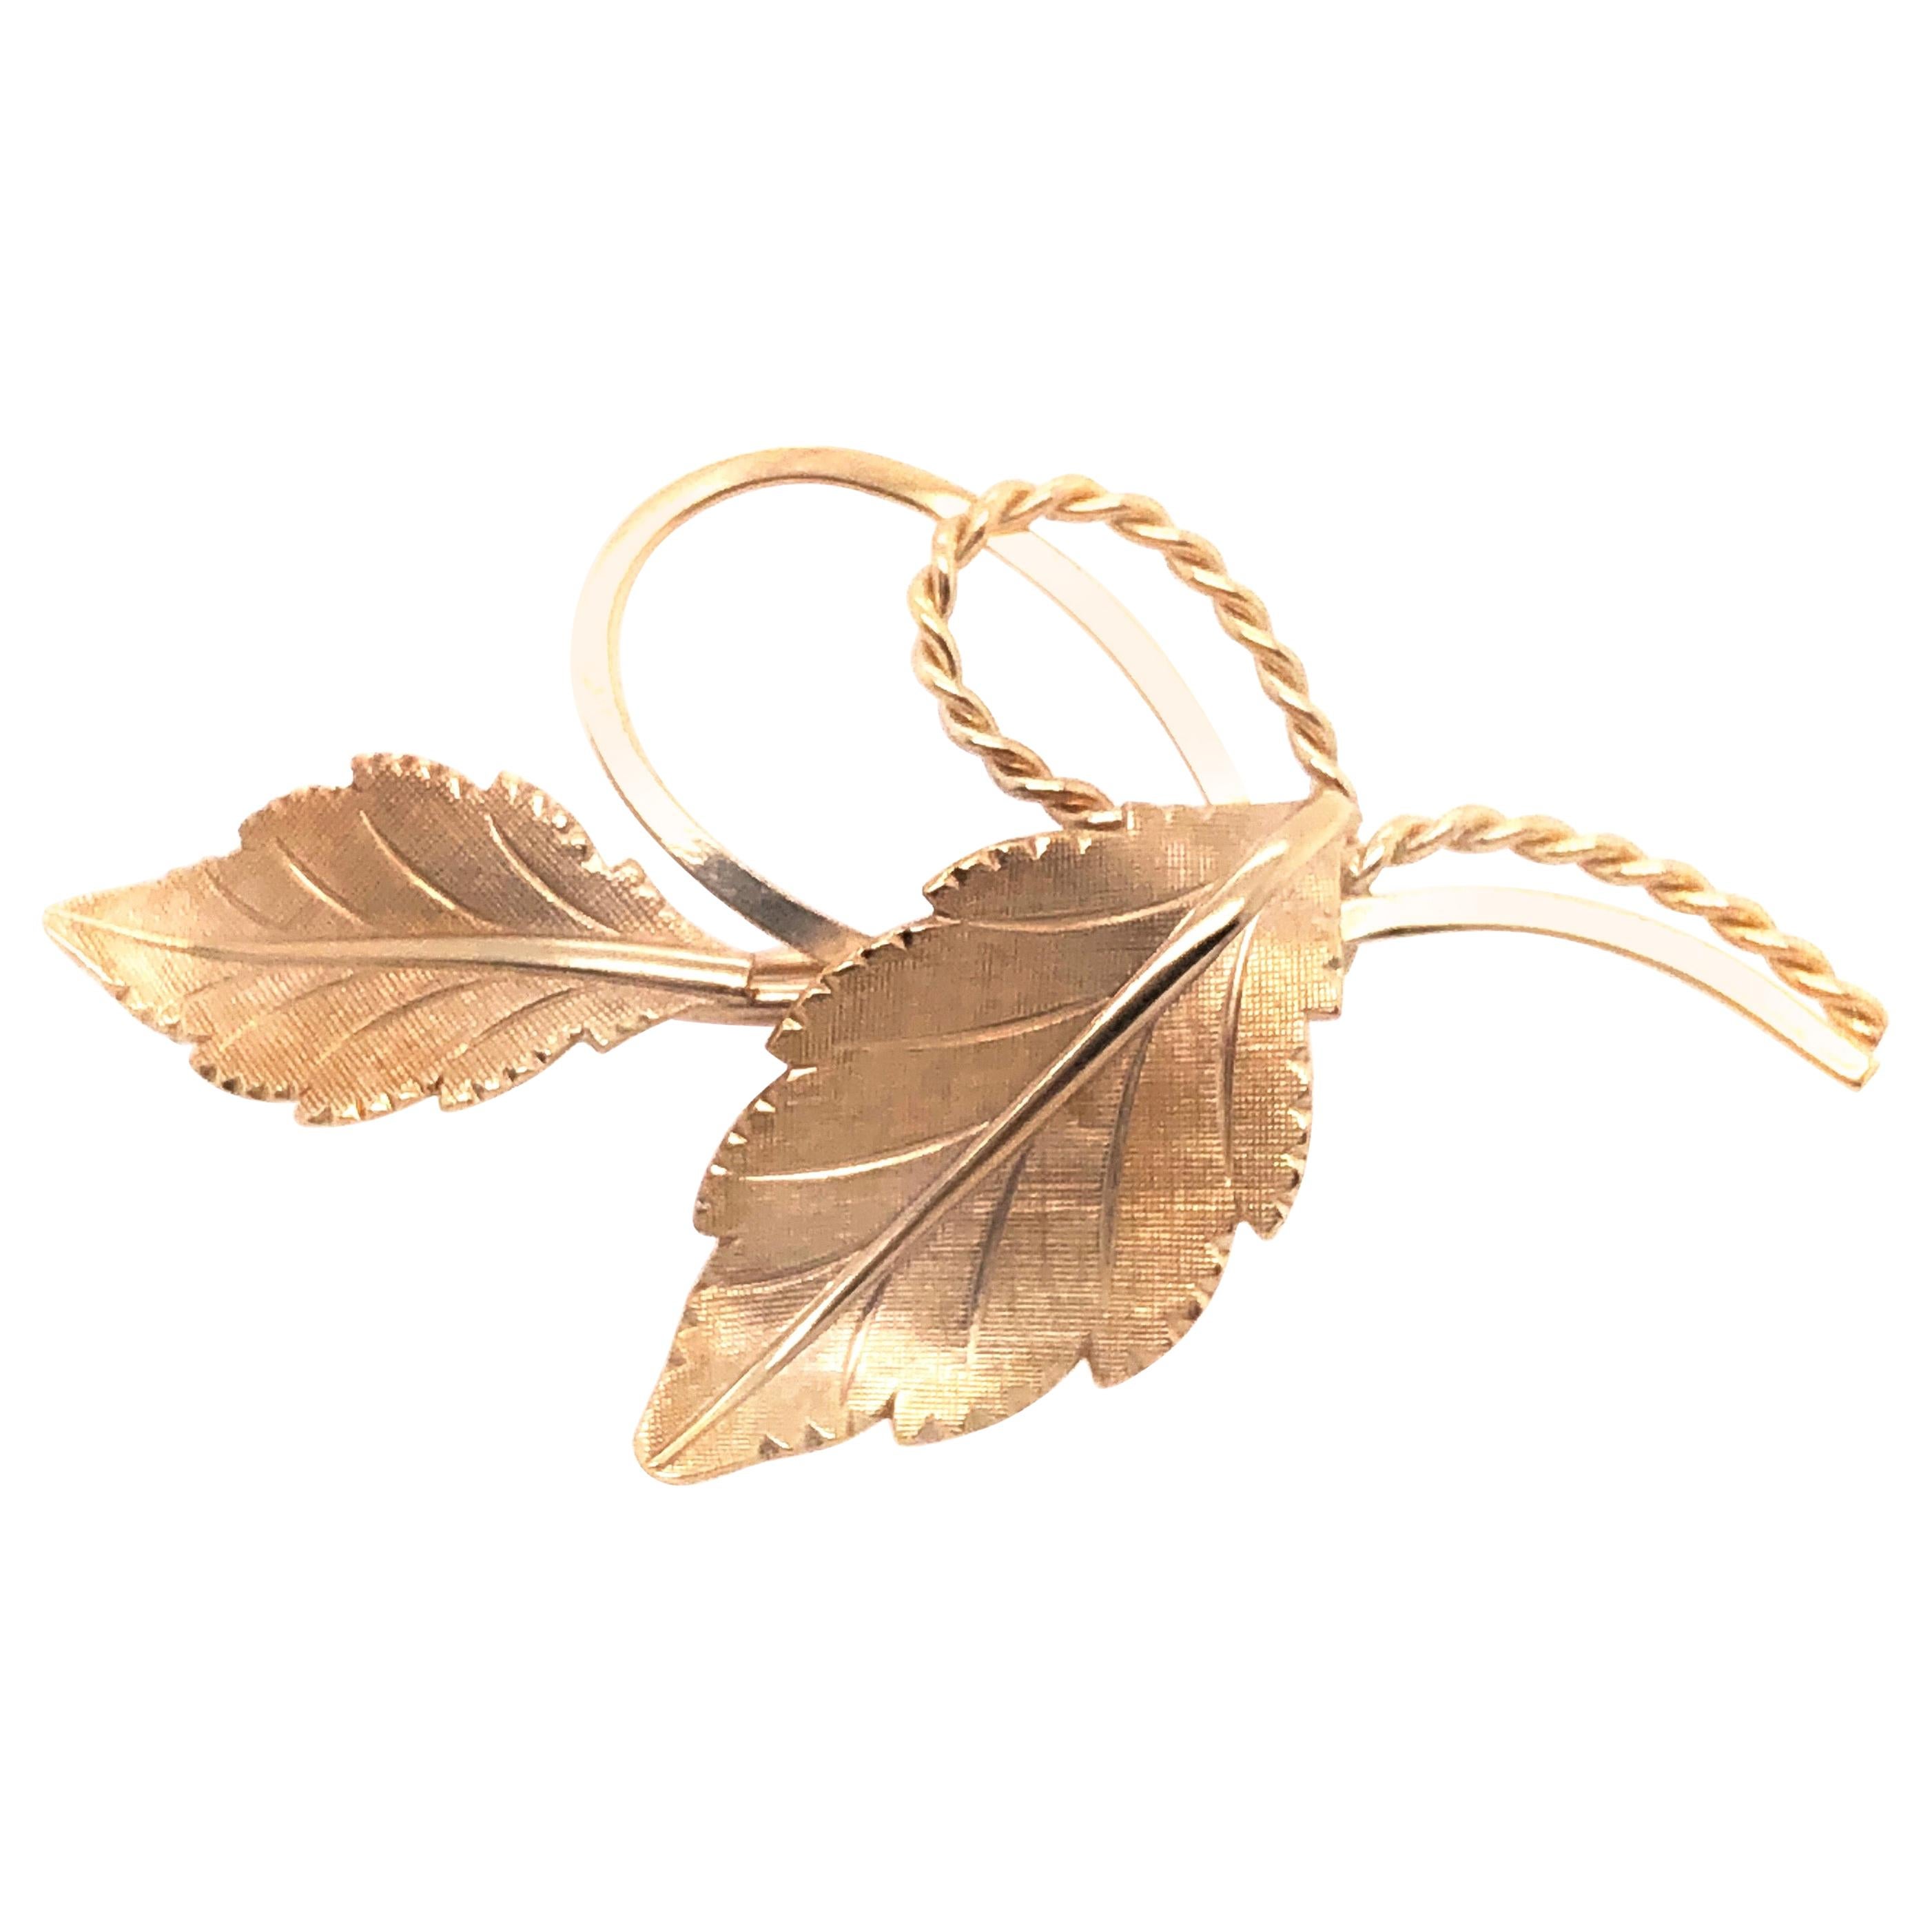 14 Karat Yellow Gold Freeform Leaf Brooch or Pin